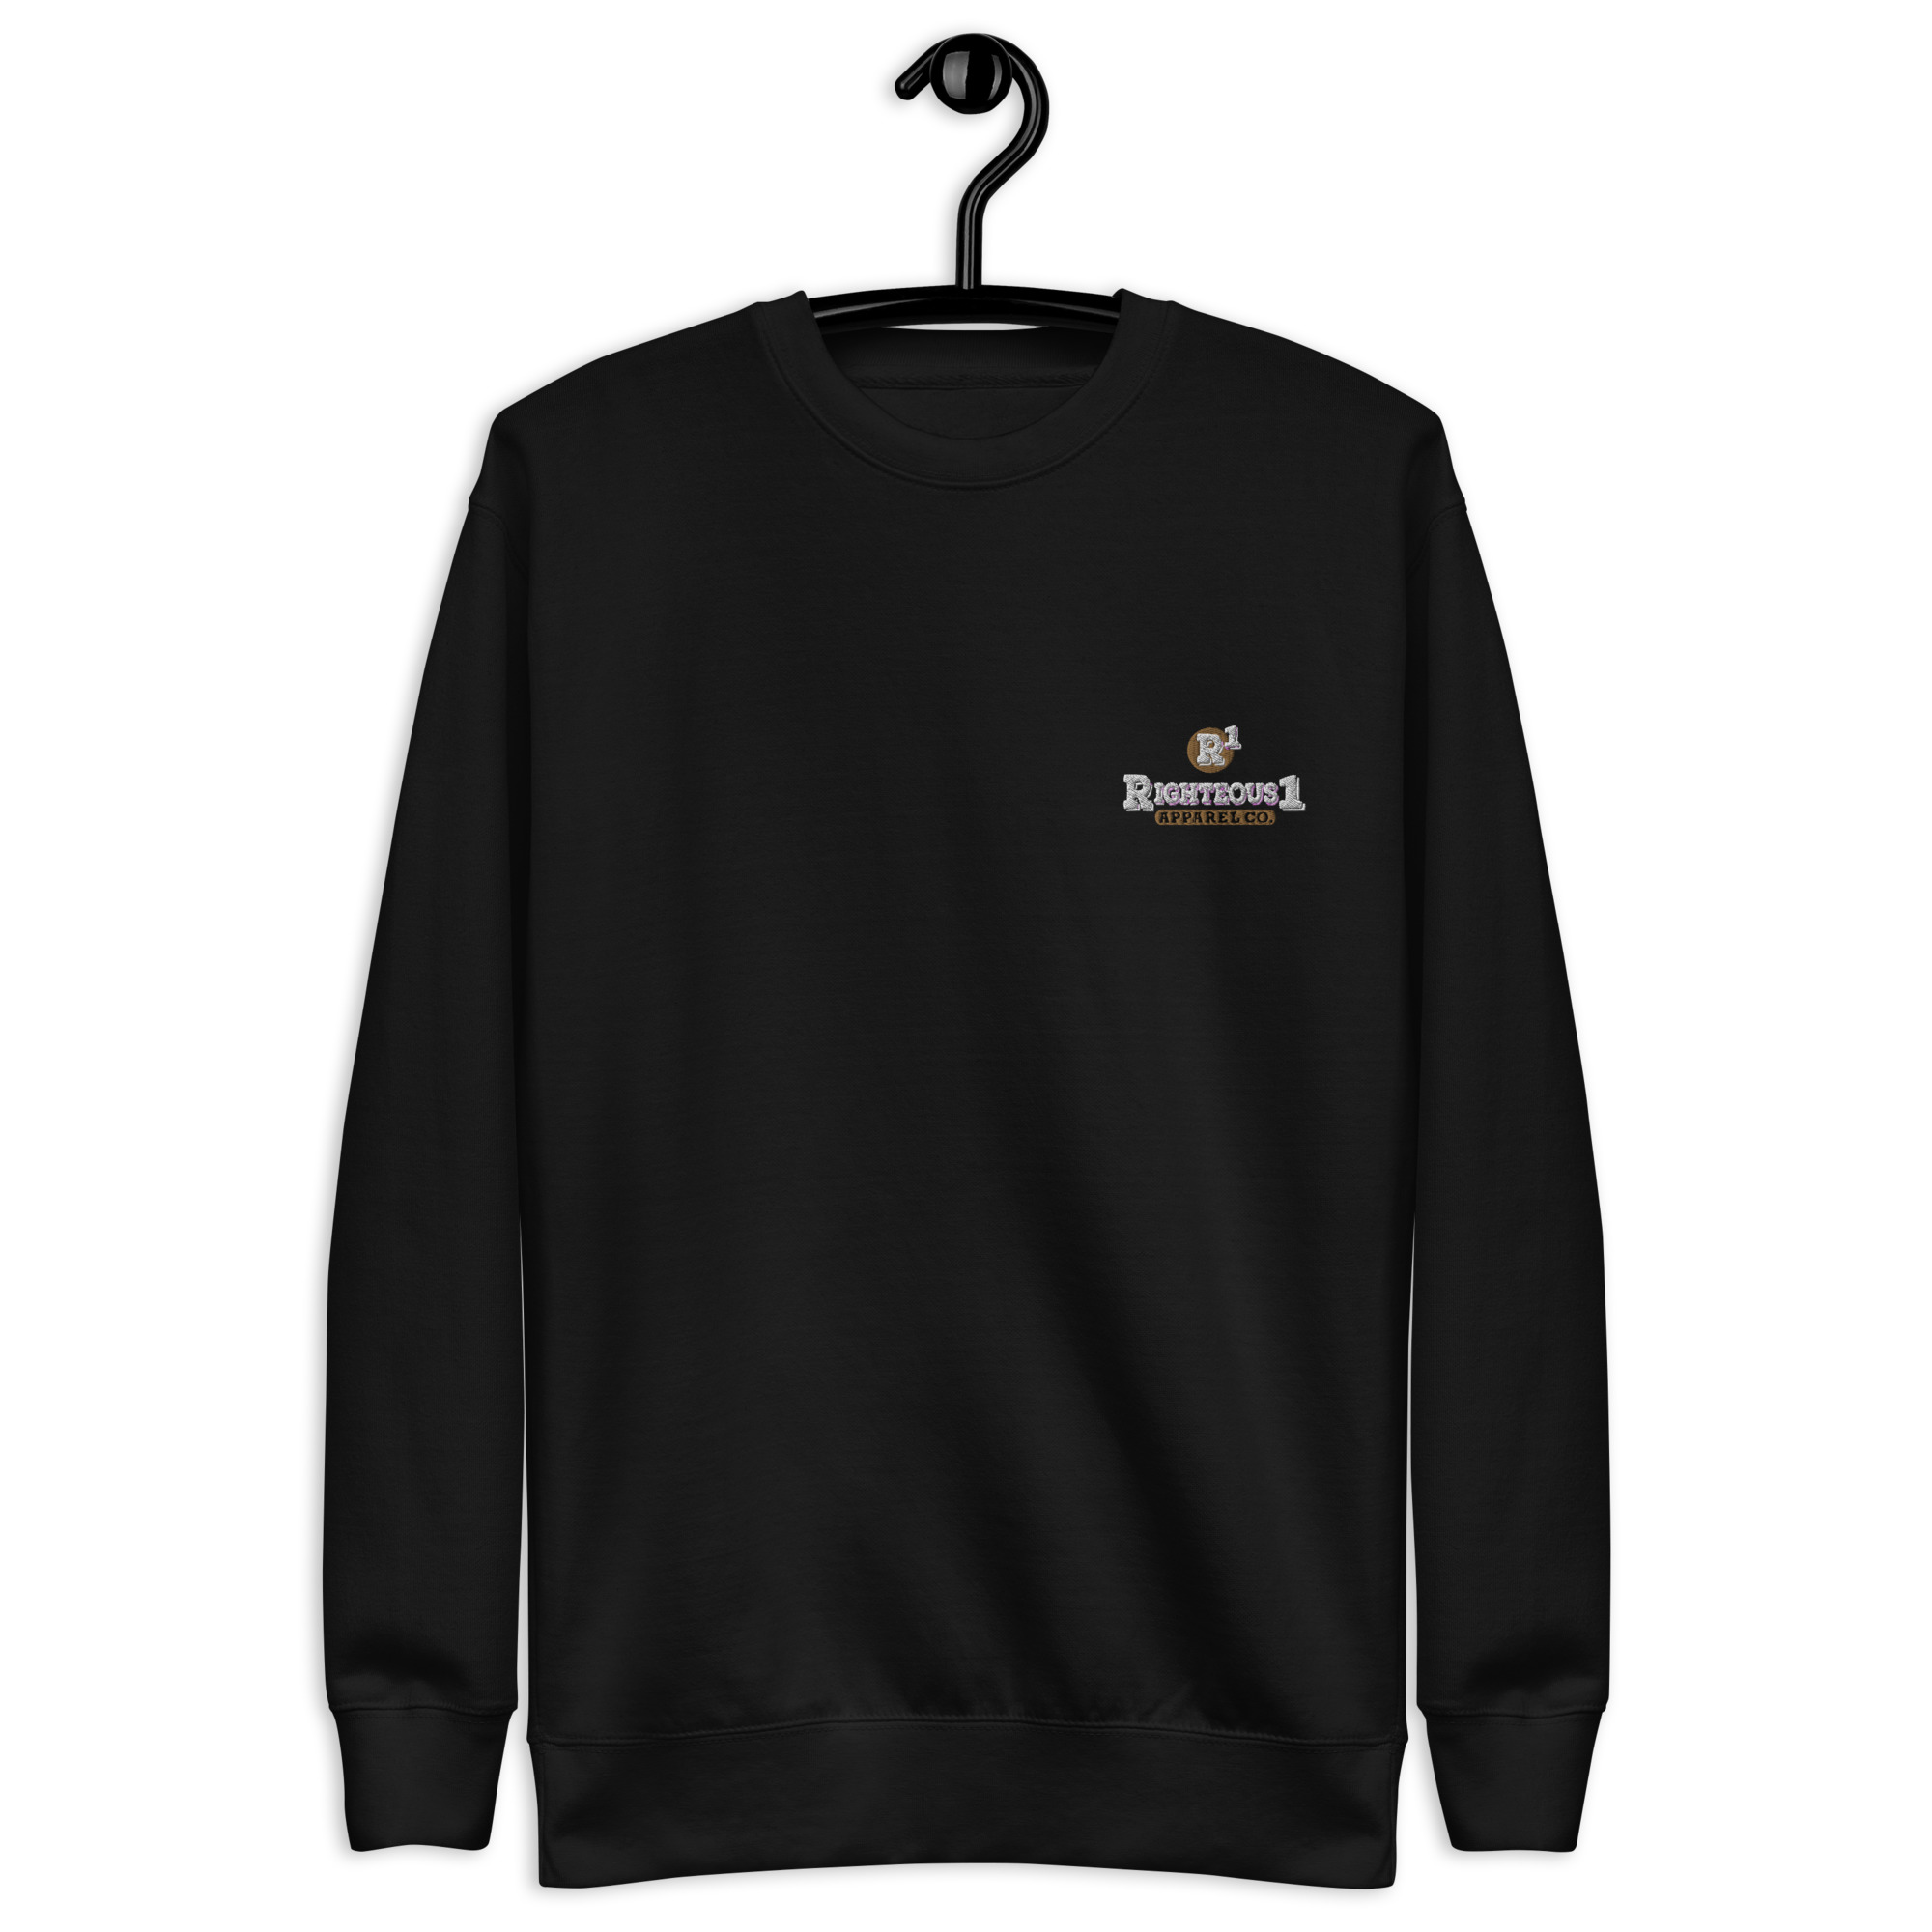 unisex-premium-sweatshirt-black-front-636e827302f34.jpg